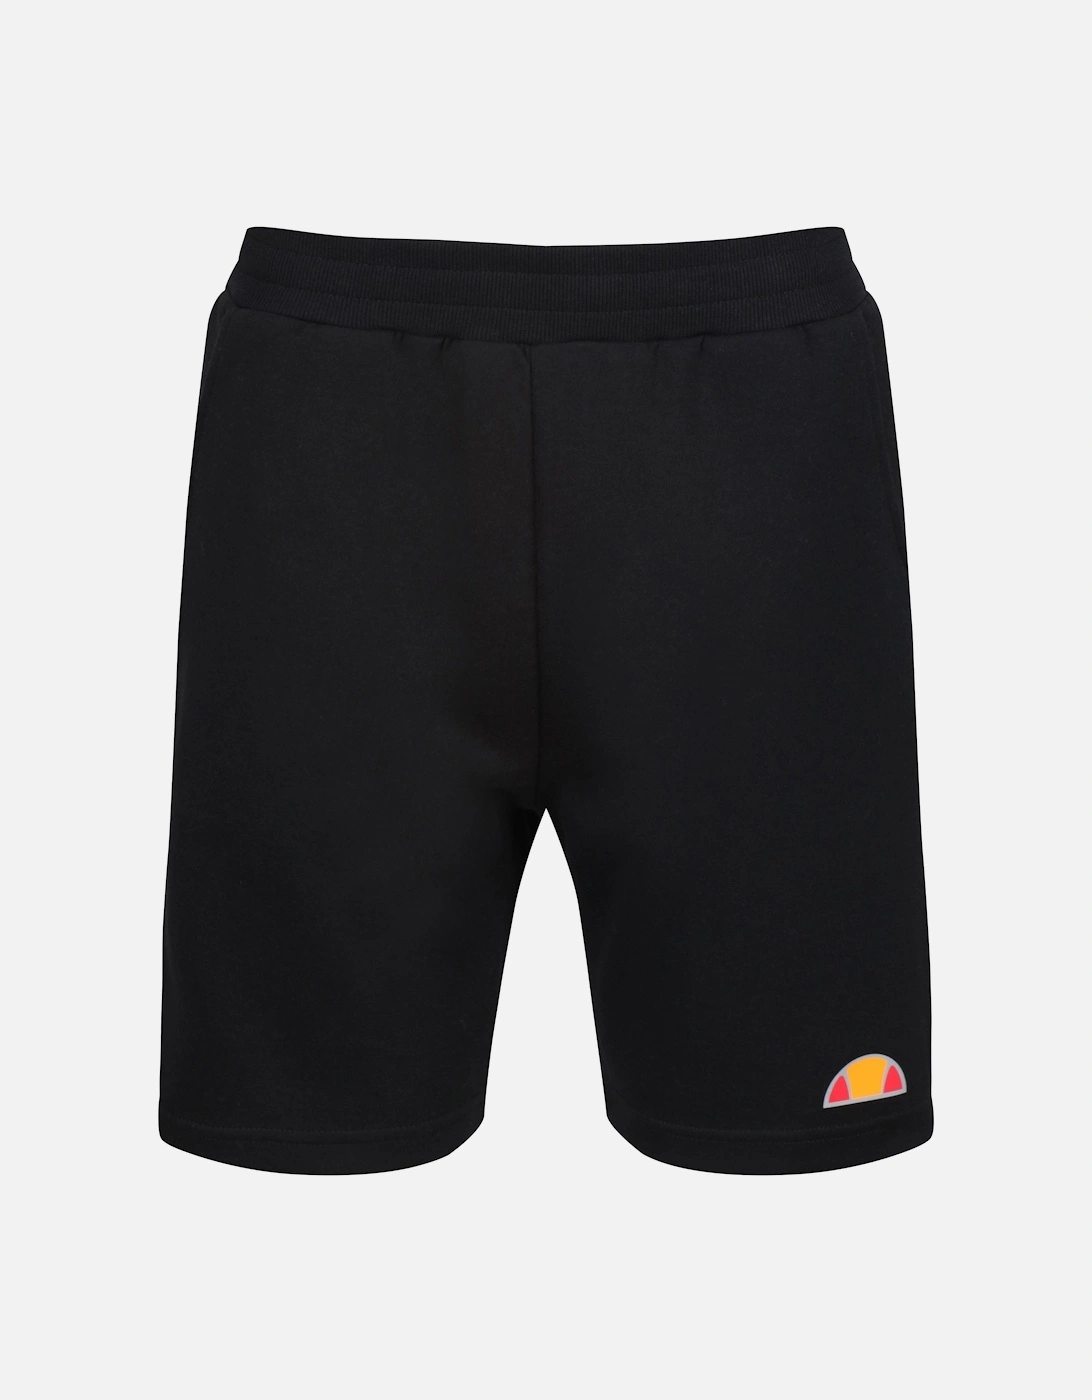 Men's Irision Sports Shorts | Black